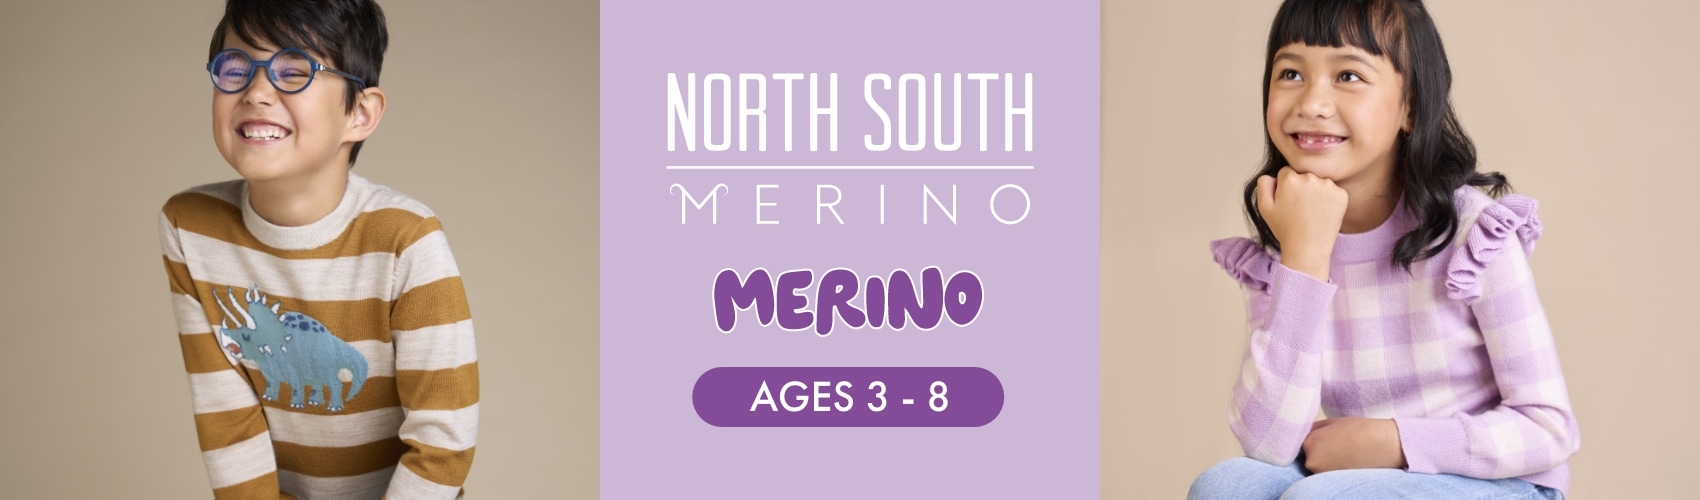 North South Merino Kids